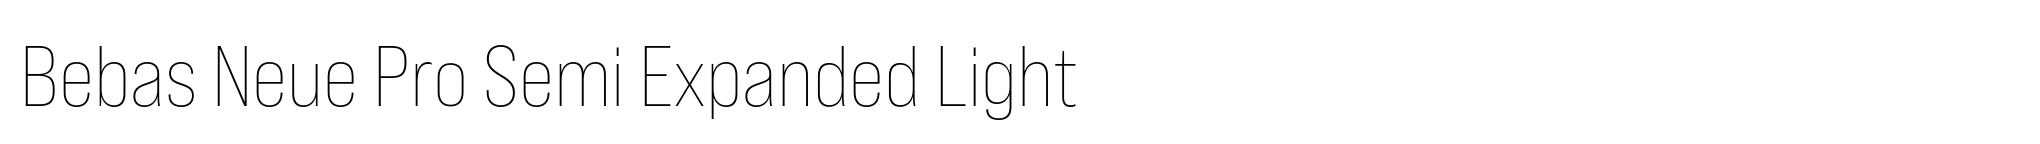 Bebas Neue Pro Semi Expanded Light image